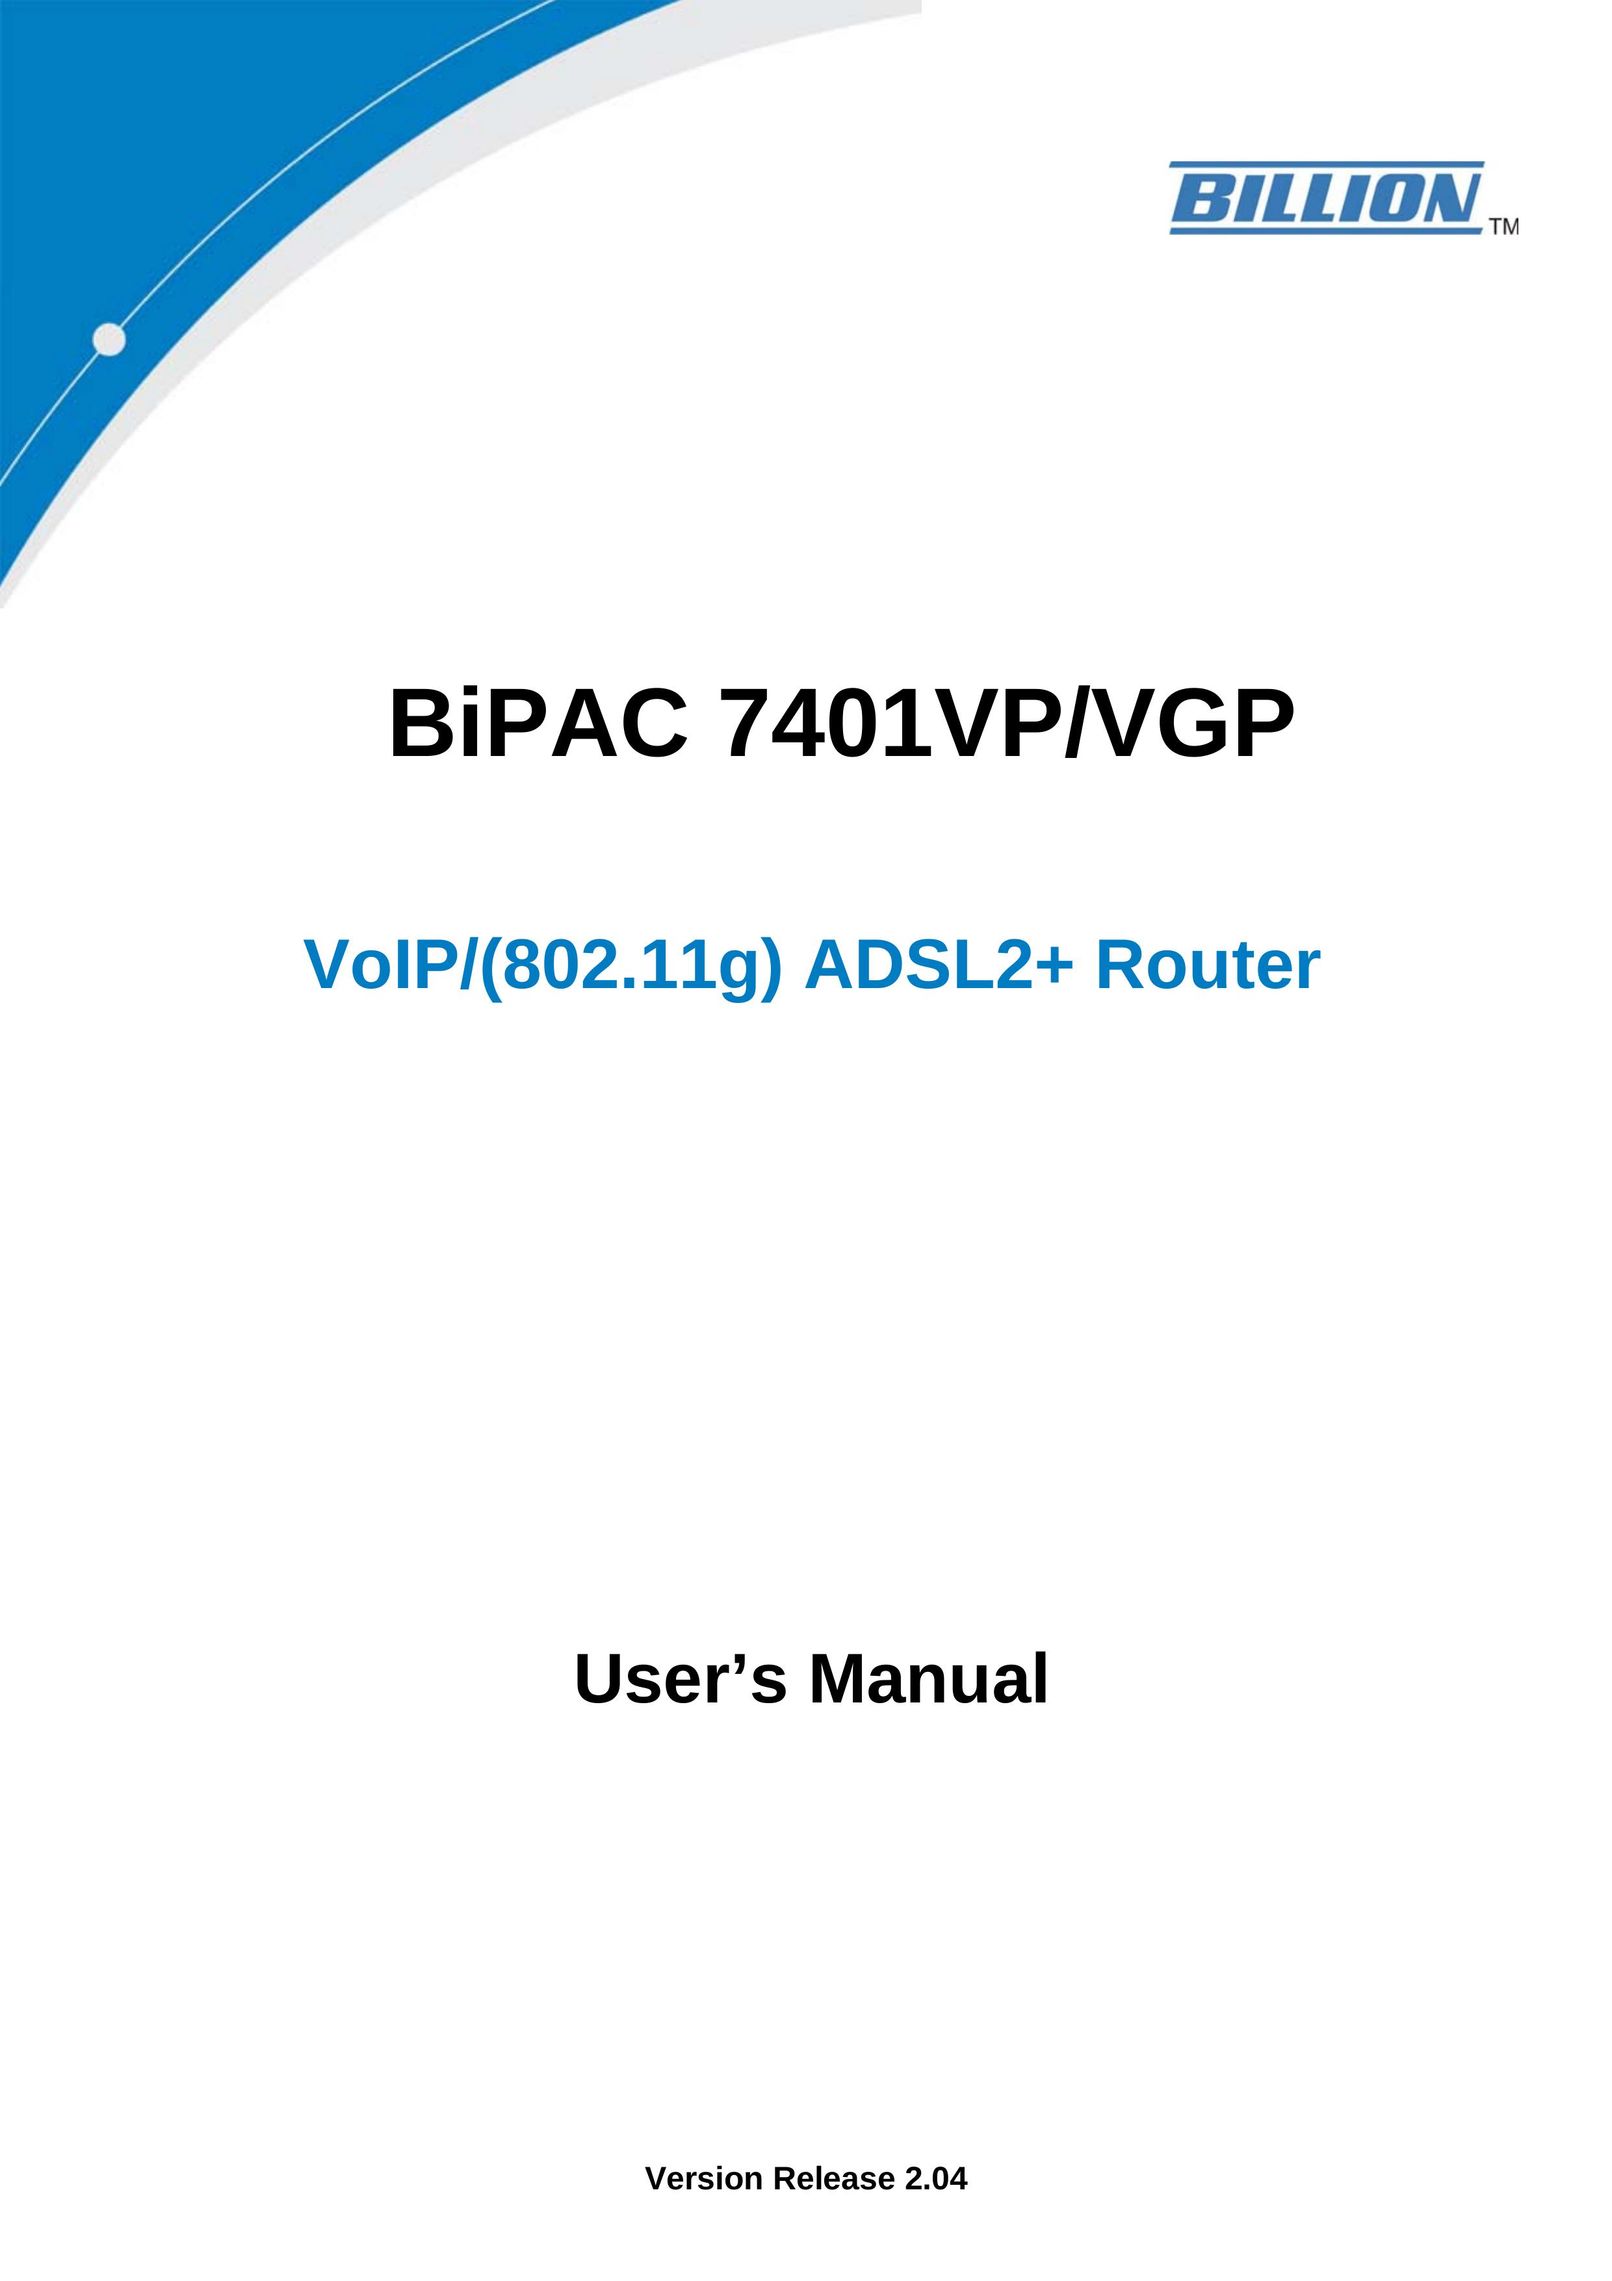 Billion Electric Company BiPAC 7401VP/VGP Router User Manual